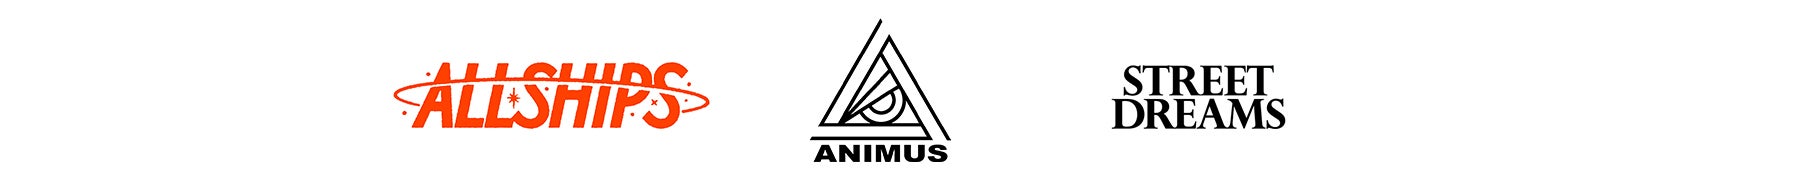 logos for Allships, Animus, and Street Dreams